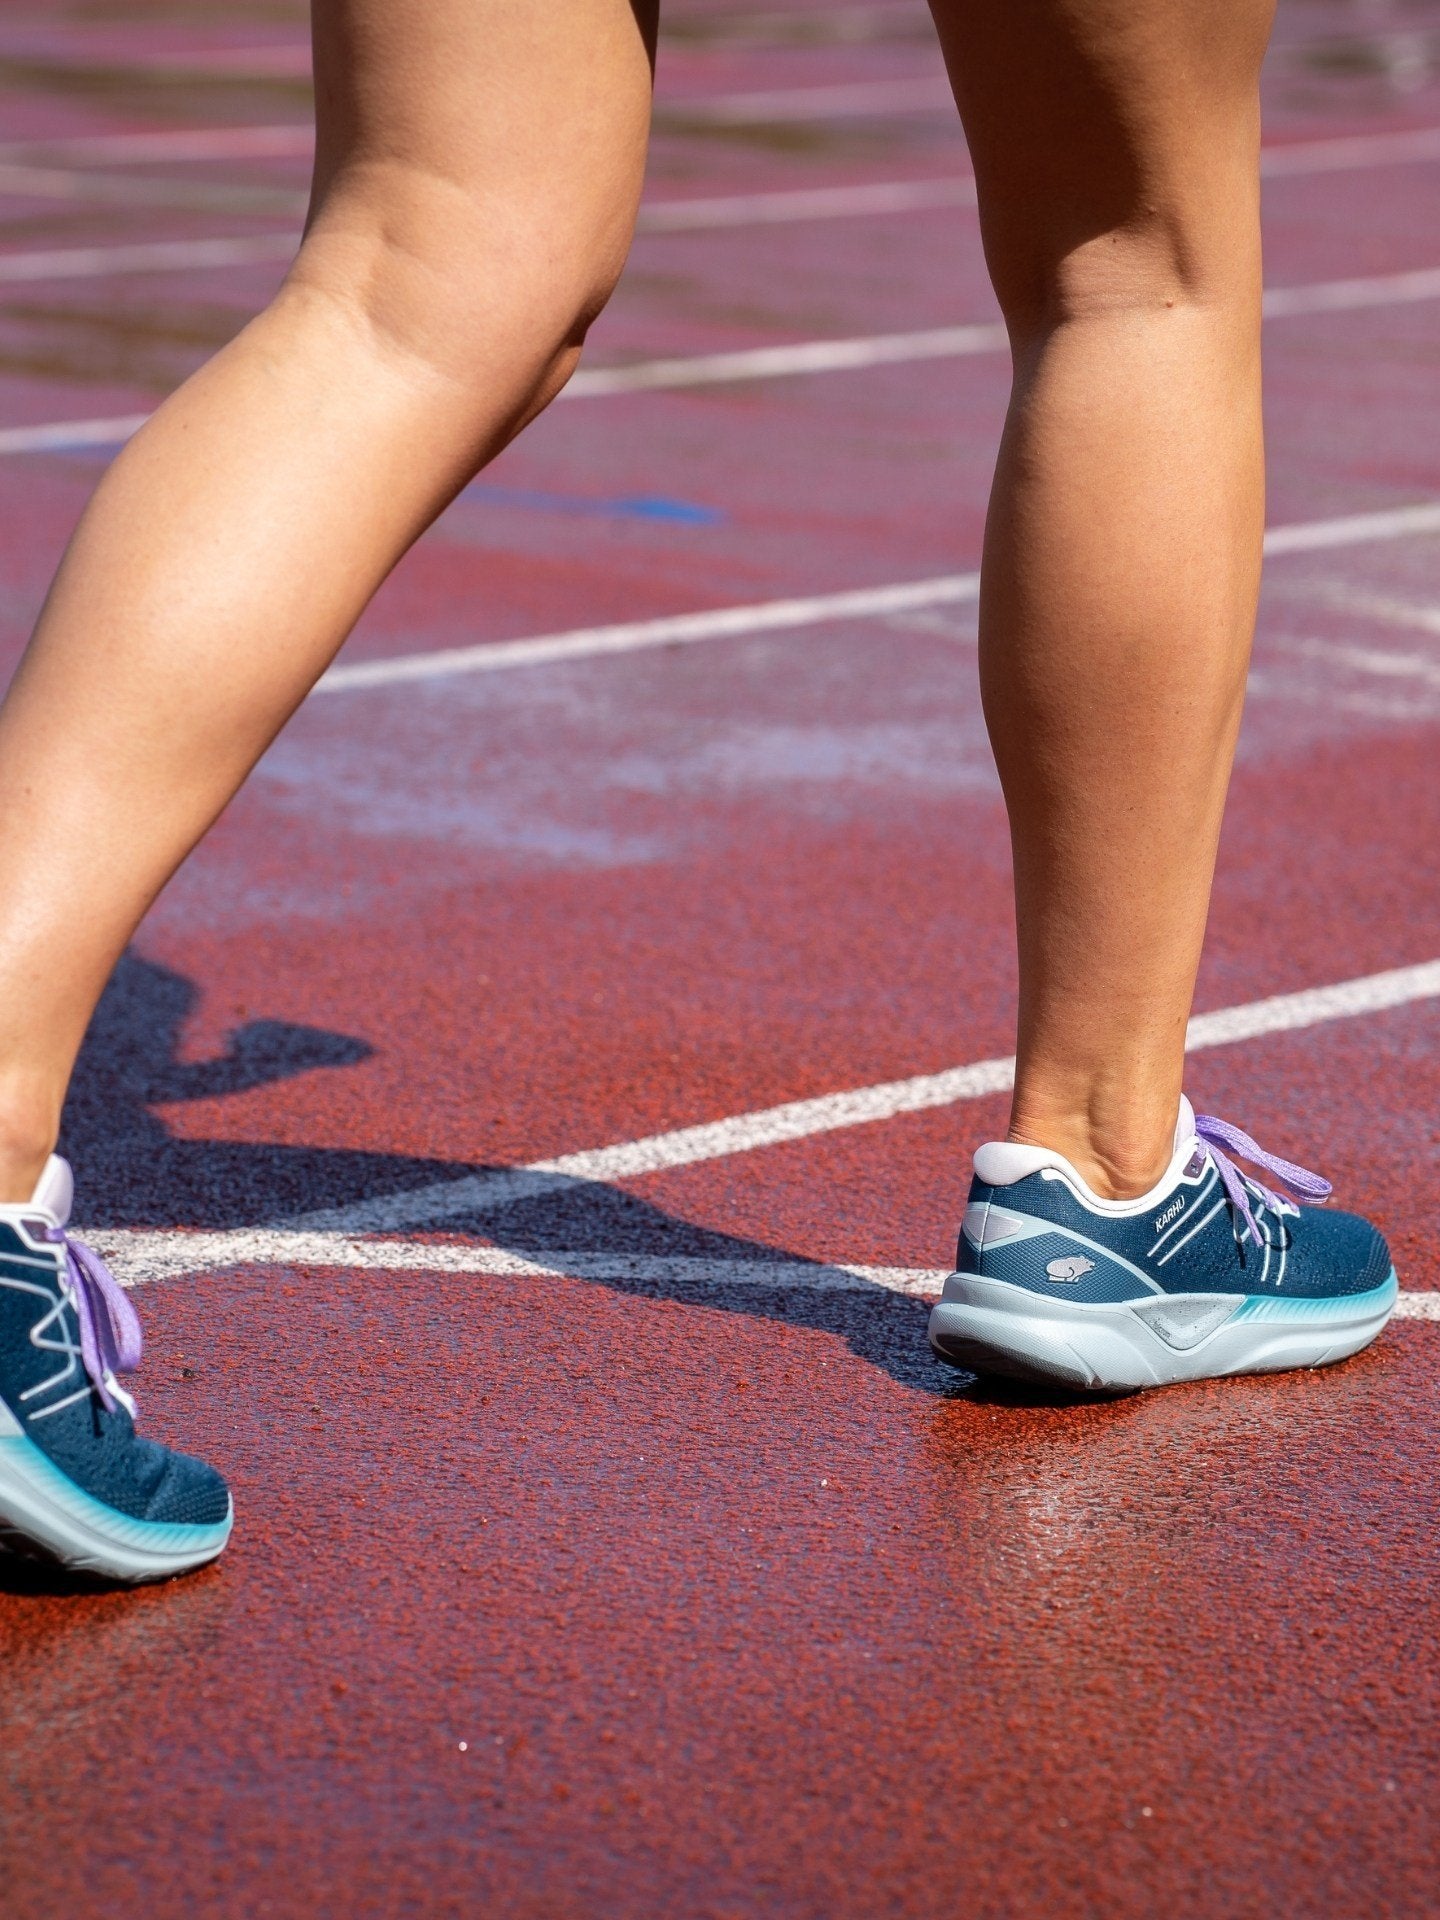 Karhu Fusion 3.5 women's running shoe on the track